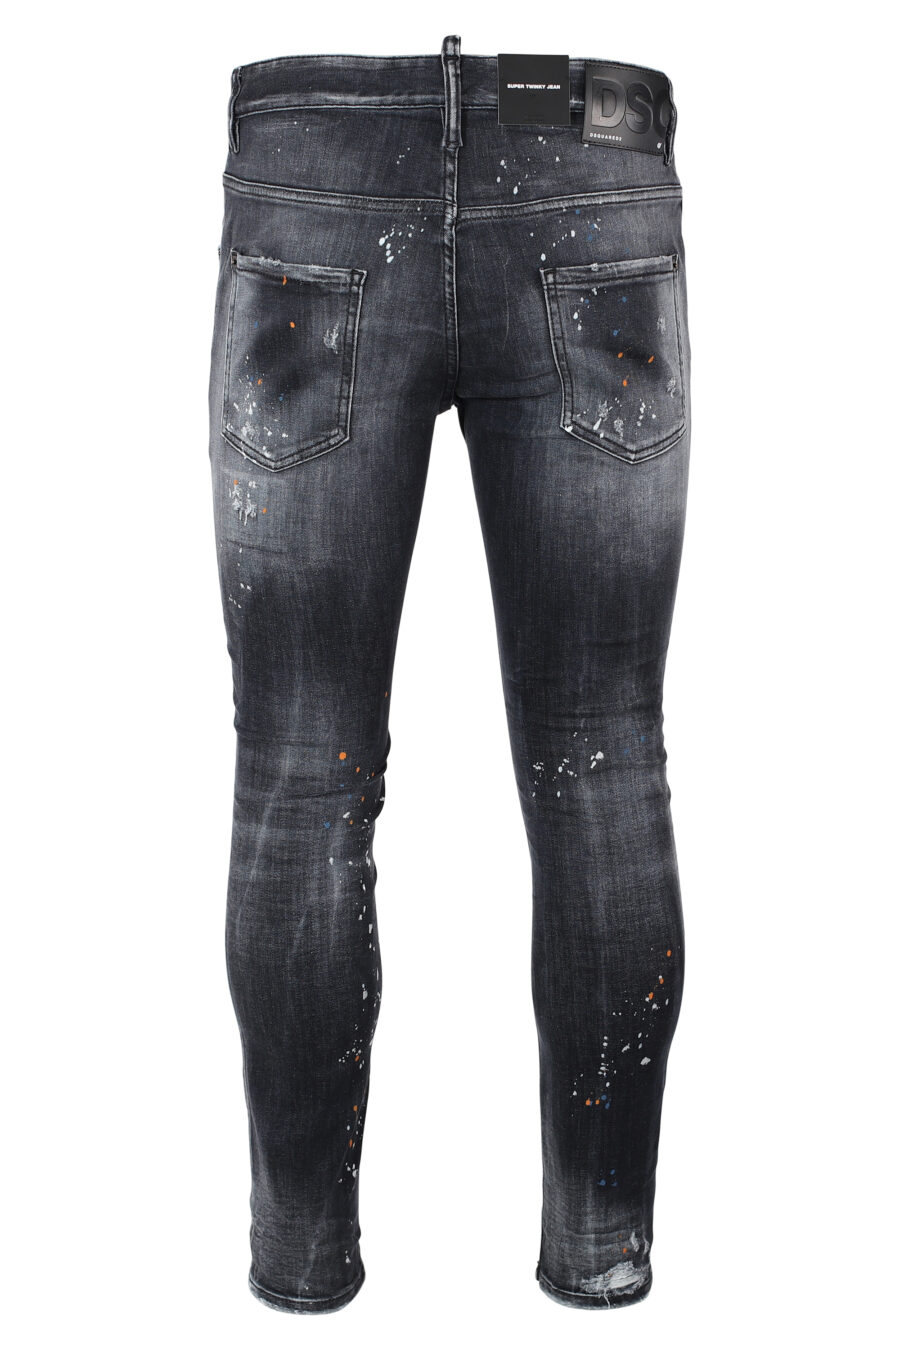 Schwarze "super twinky jean" getragene und zerrissene Jeans - IMG 9891